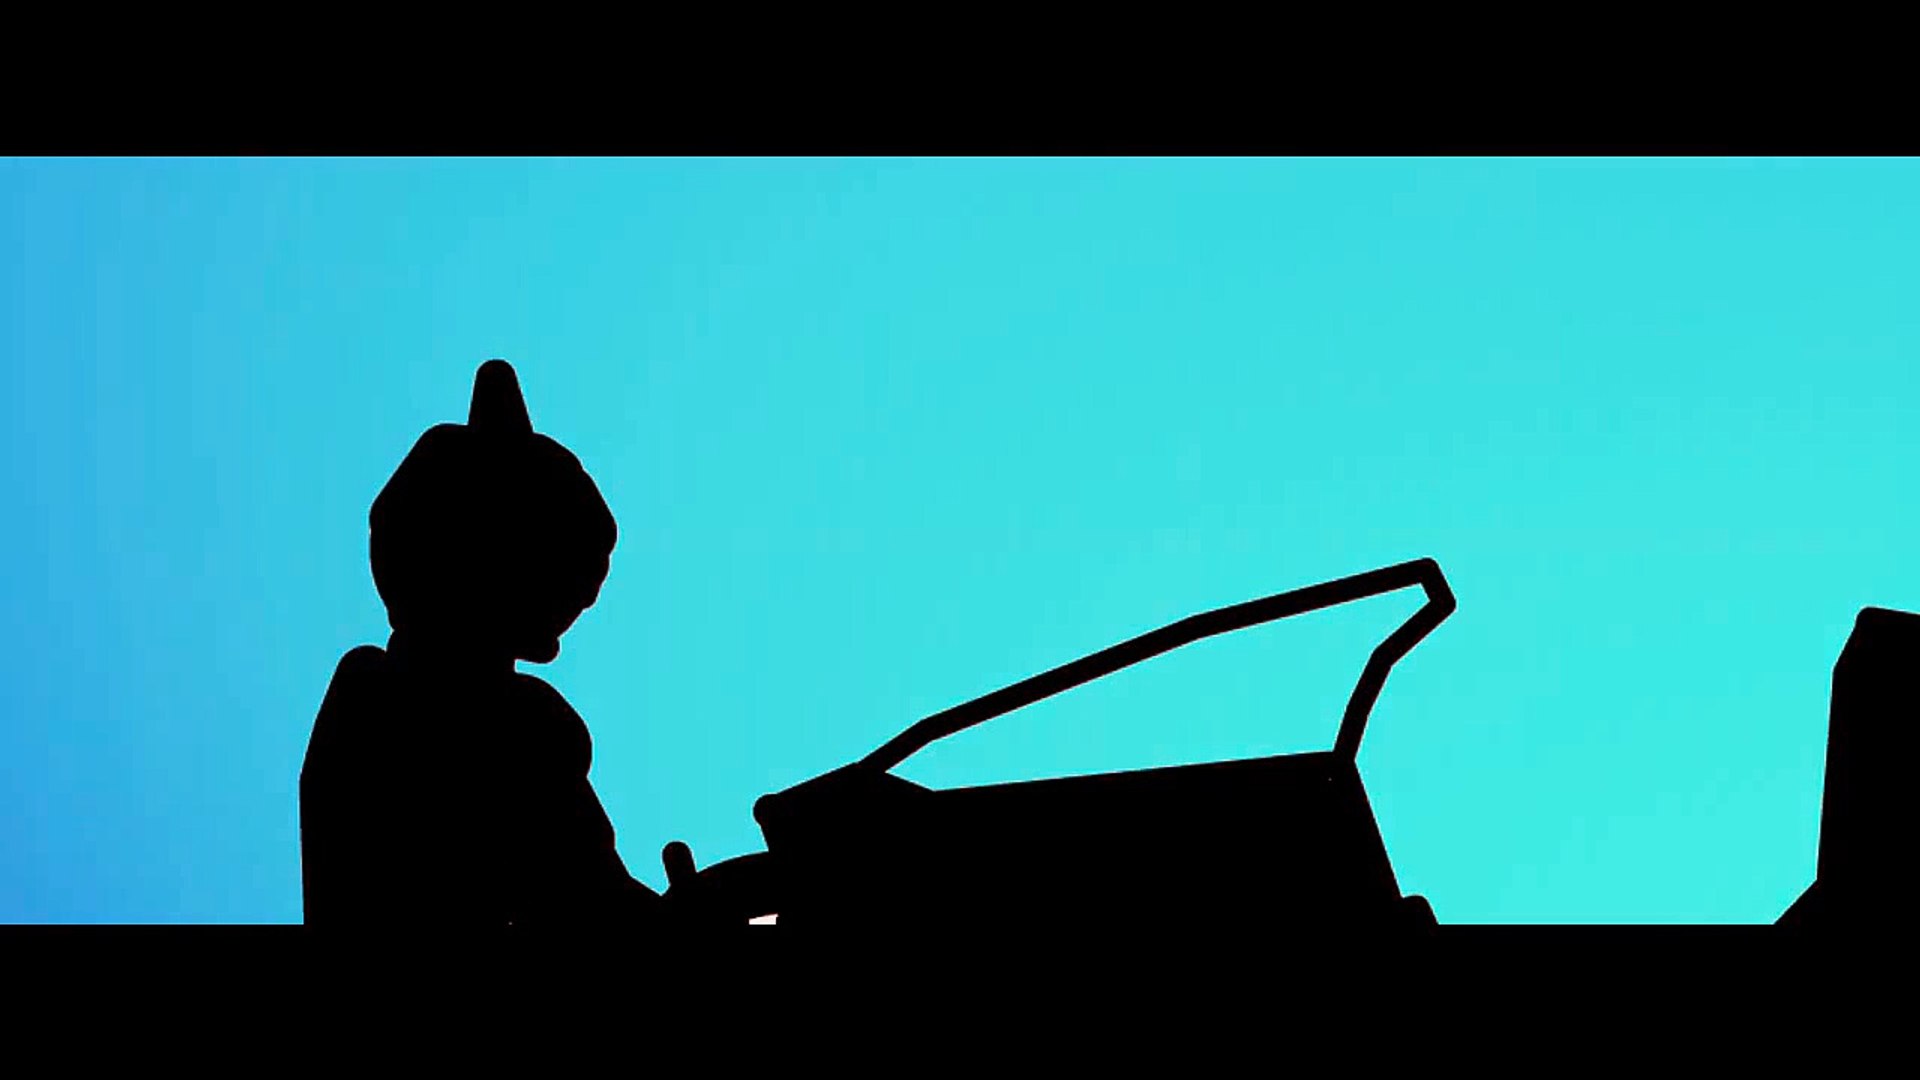 BATMAN (Animated Short Film) - Pivot Animation